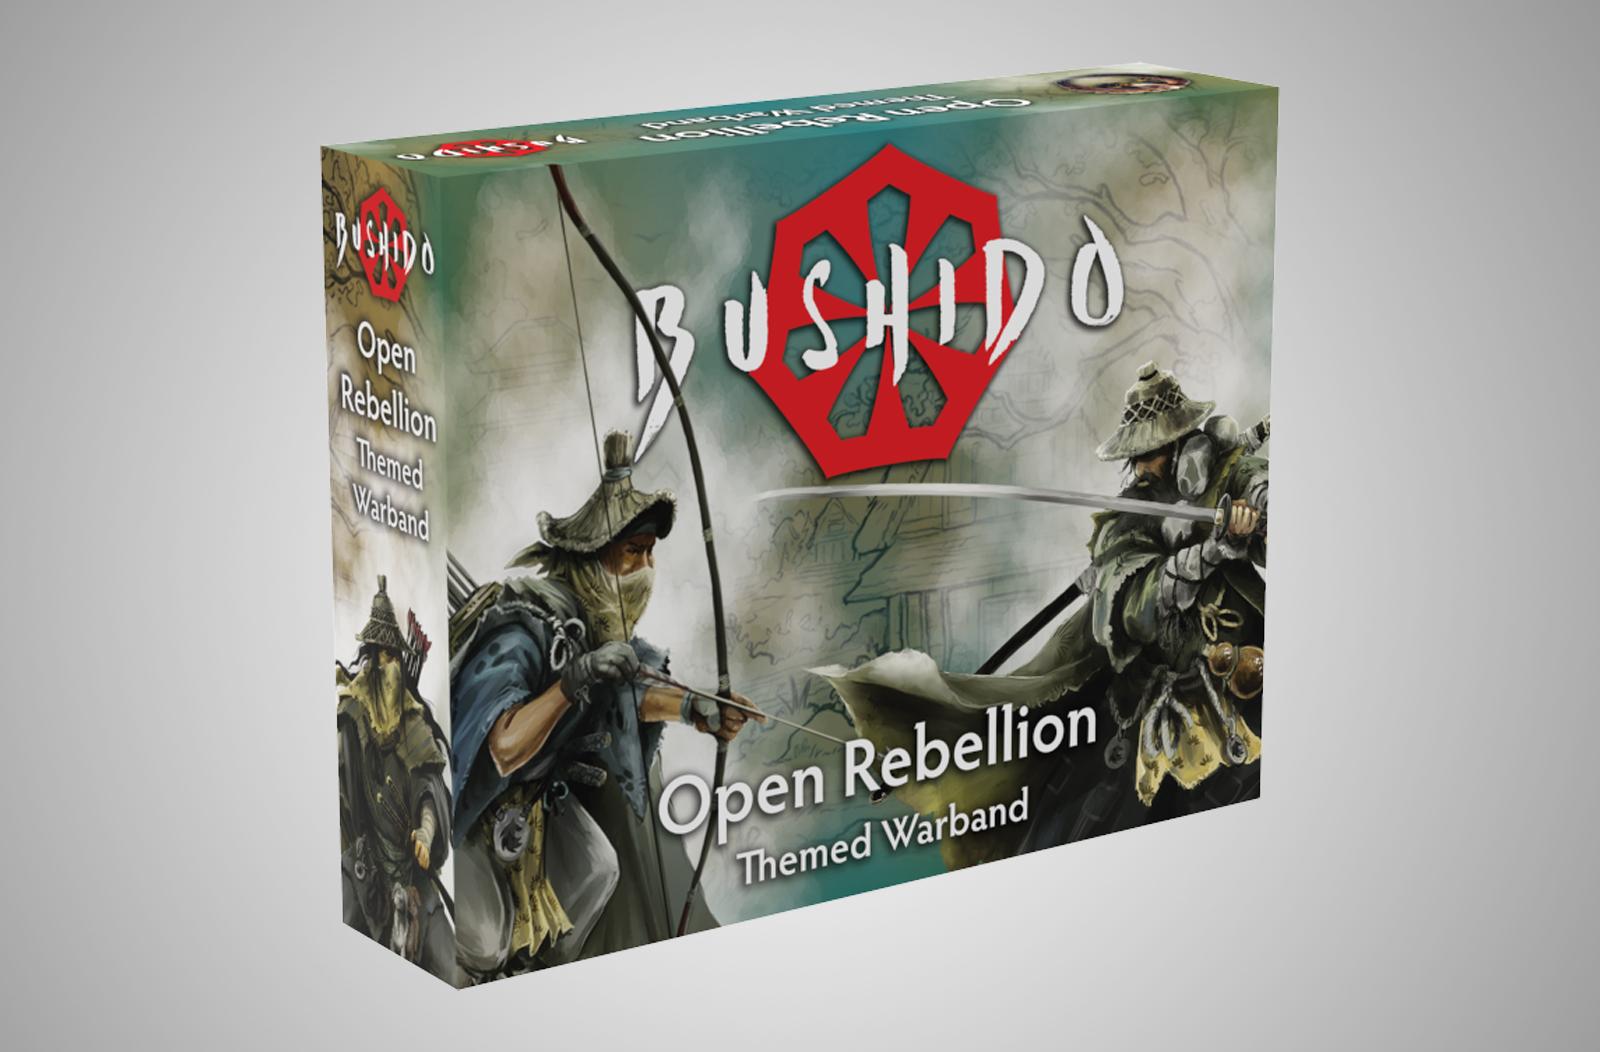 Box of open rebellion war band